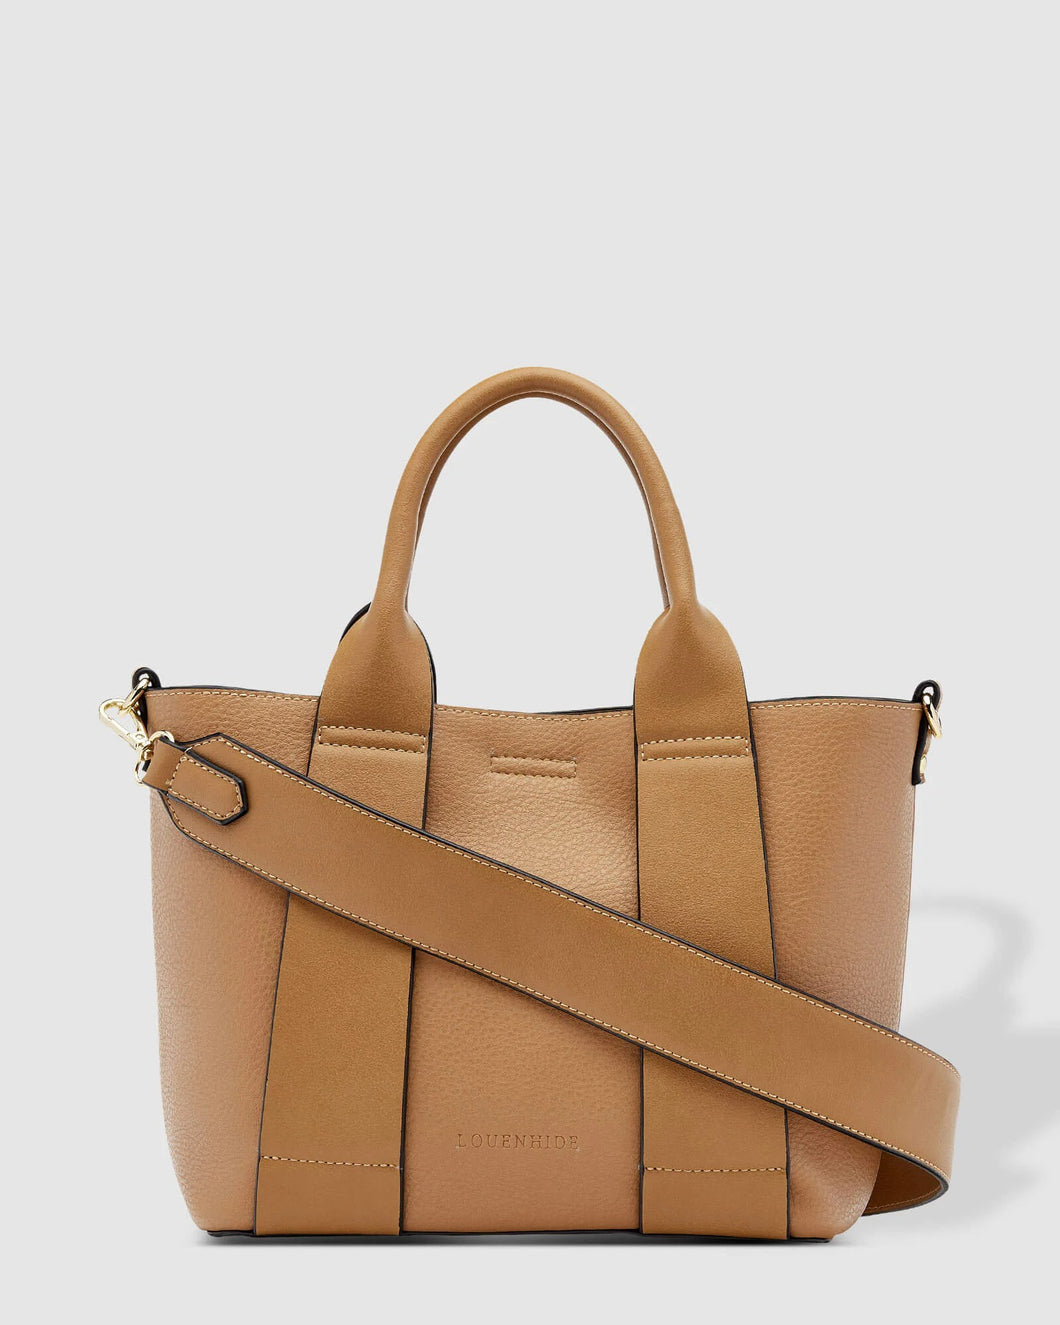 Louenhide Baby Windsor Handbag